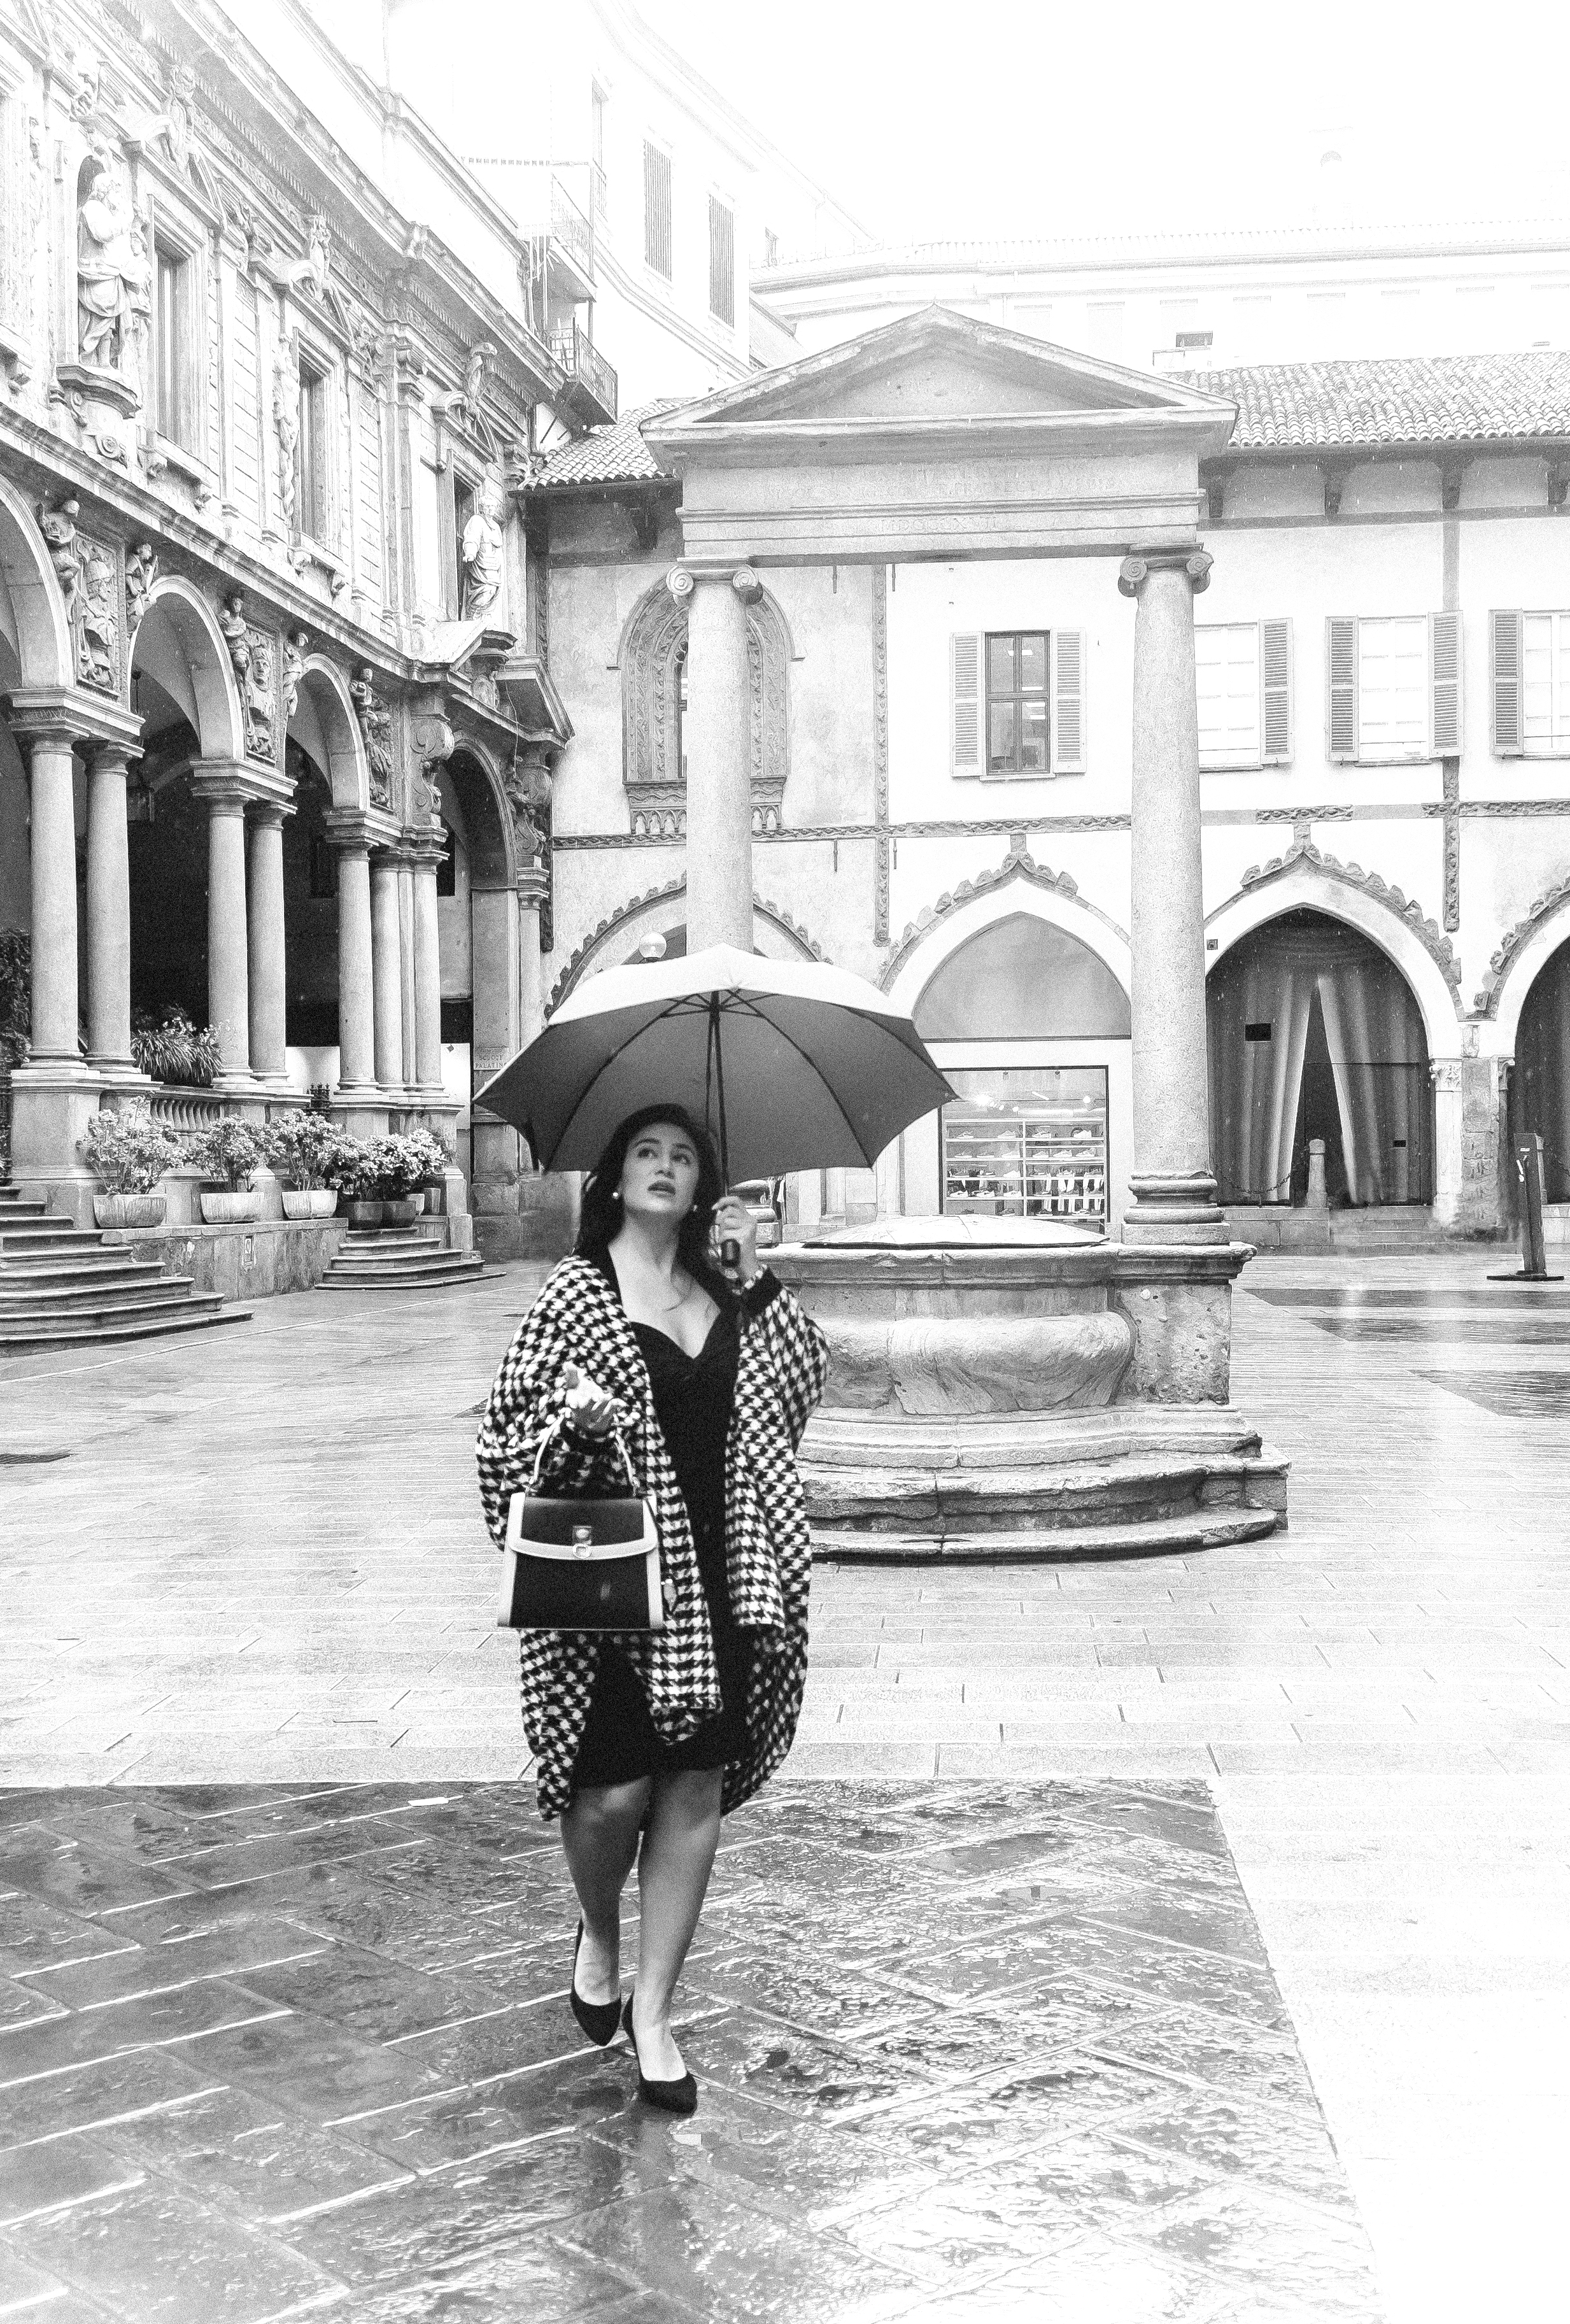 Italian woman walking in the rain on a piazza, gracefully holding an umbrella and an ILNI handbag.